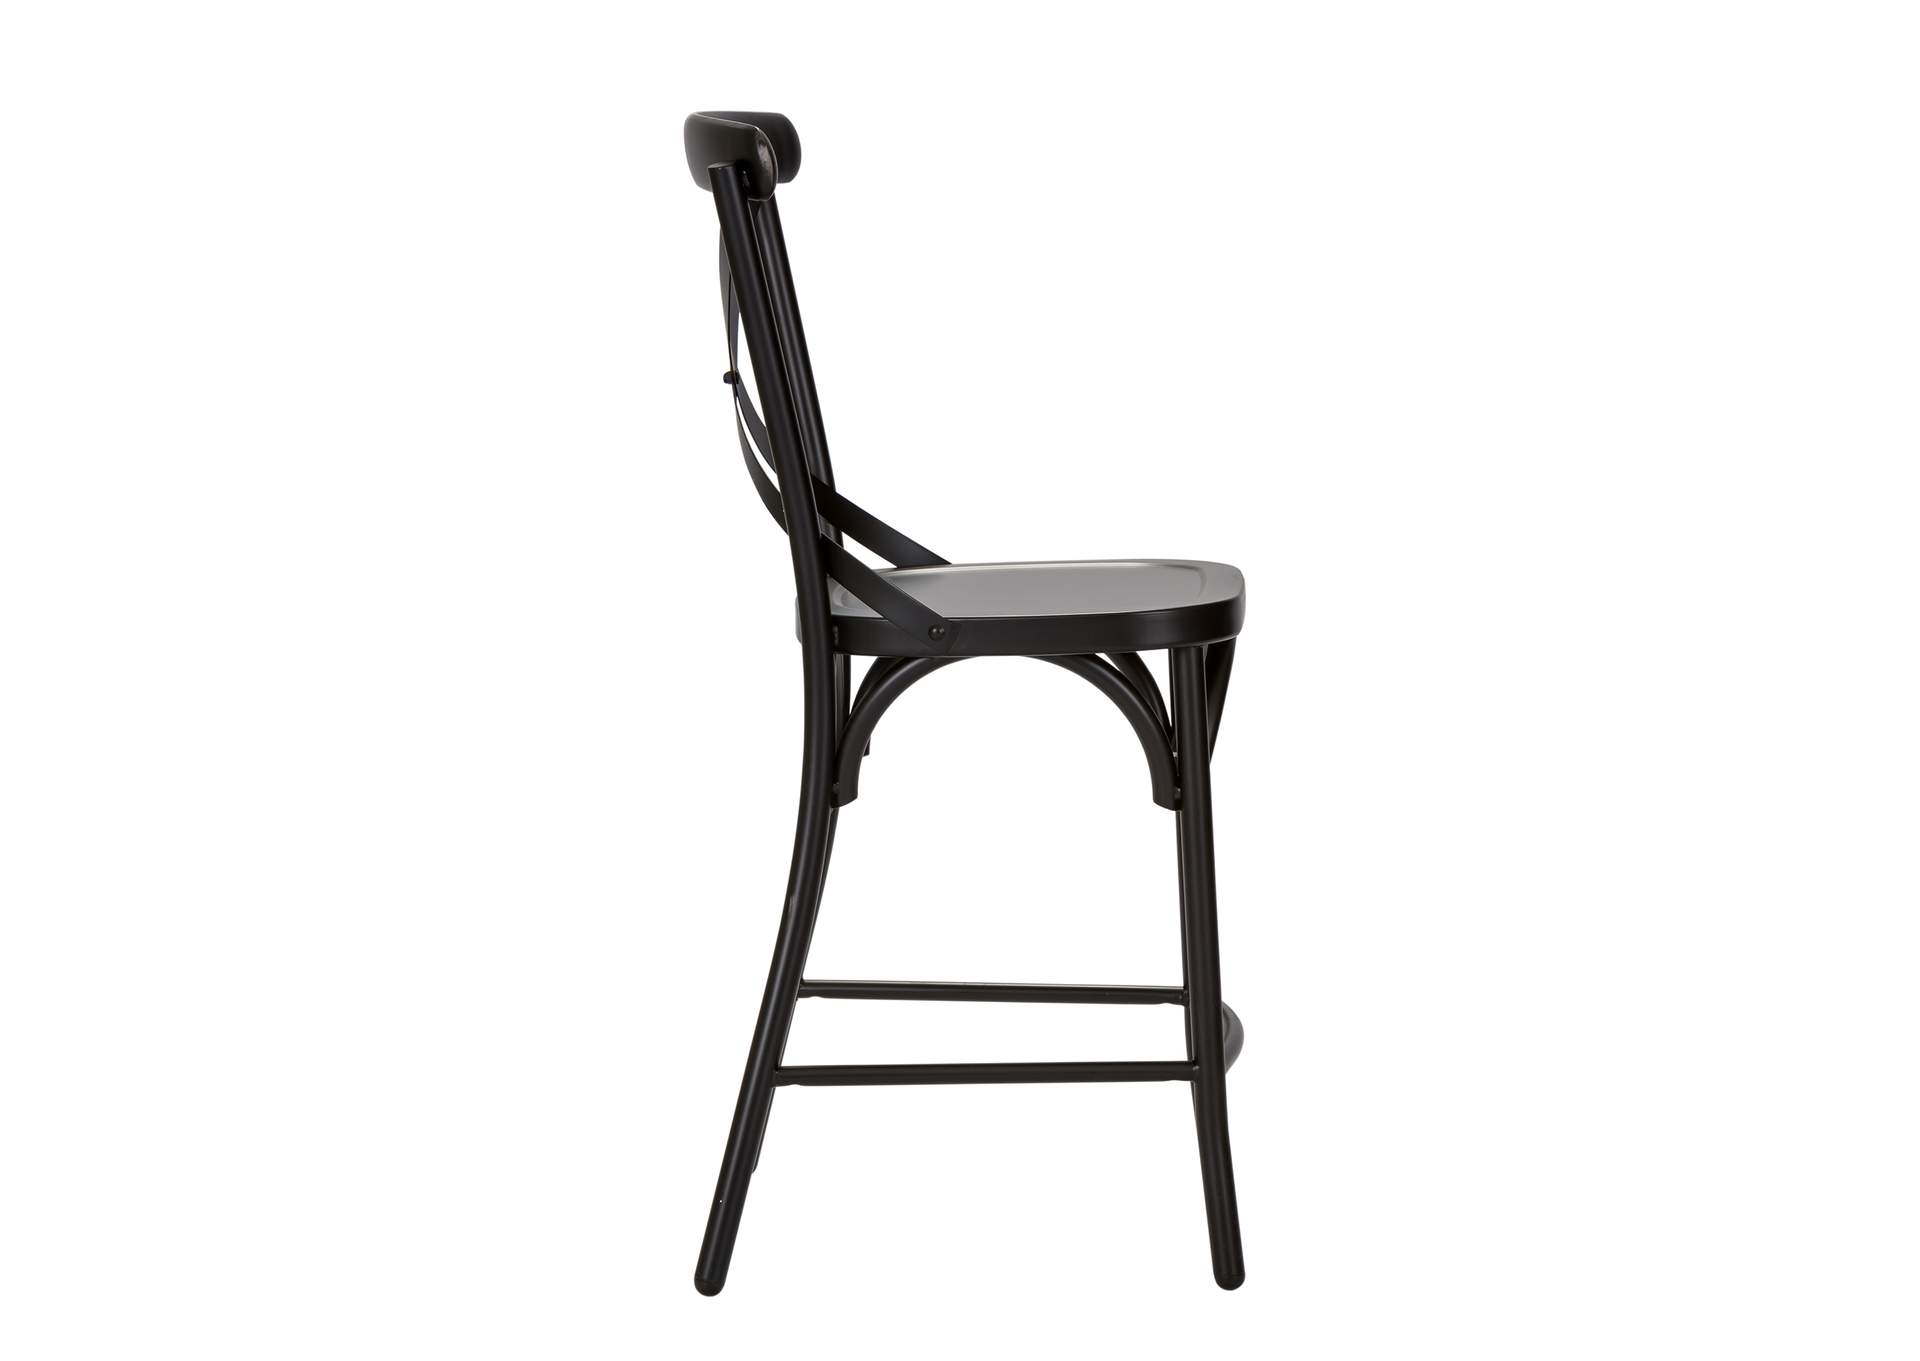 Vintage Series X Back Counter Chair - Black,Liberty